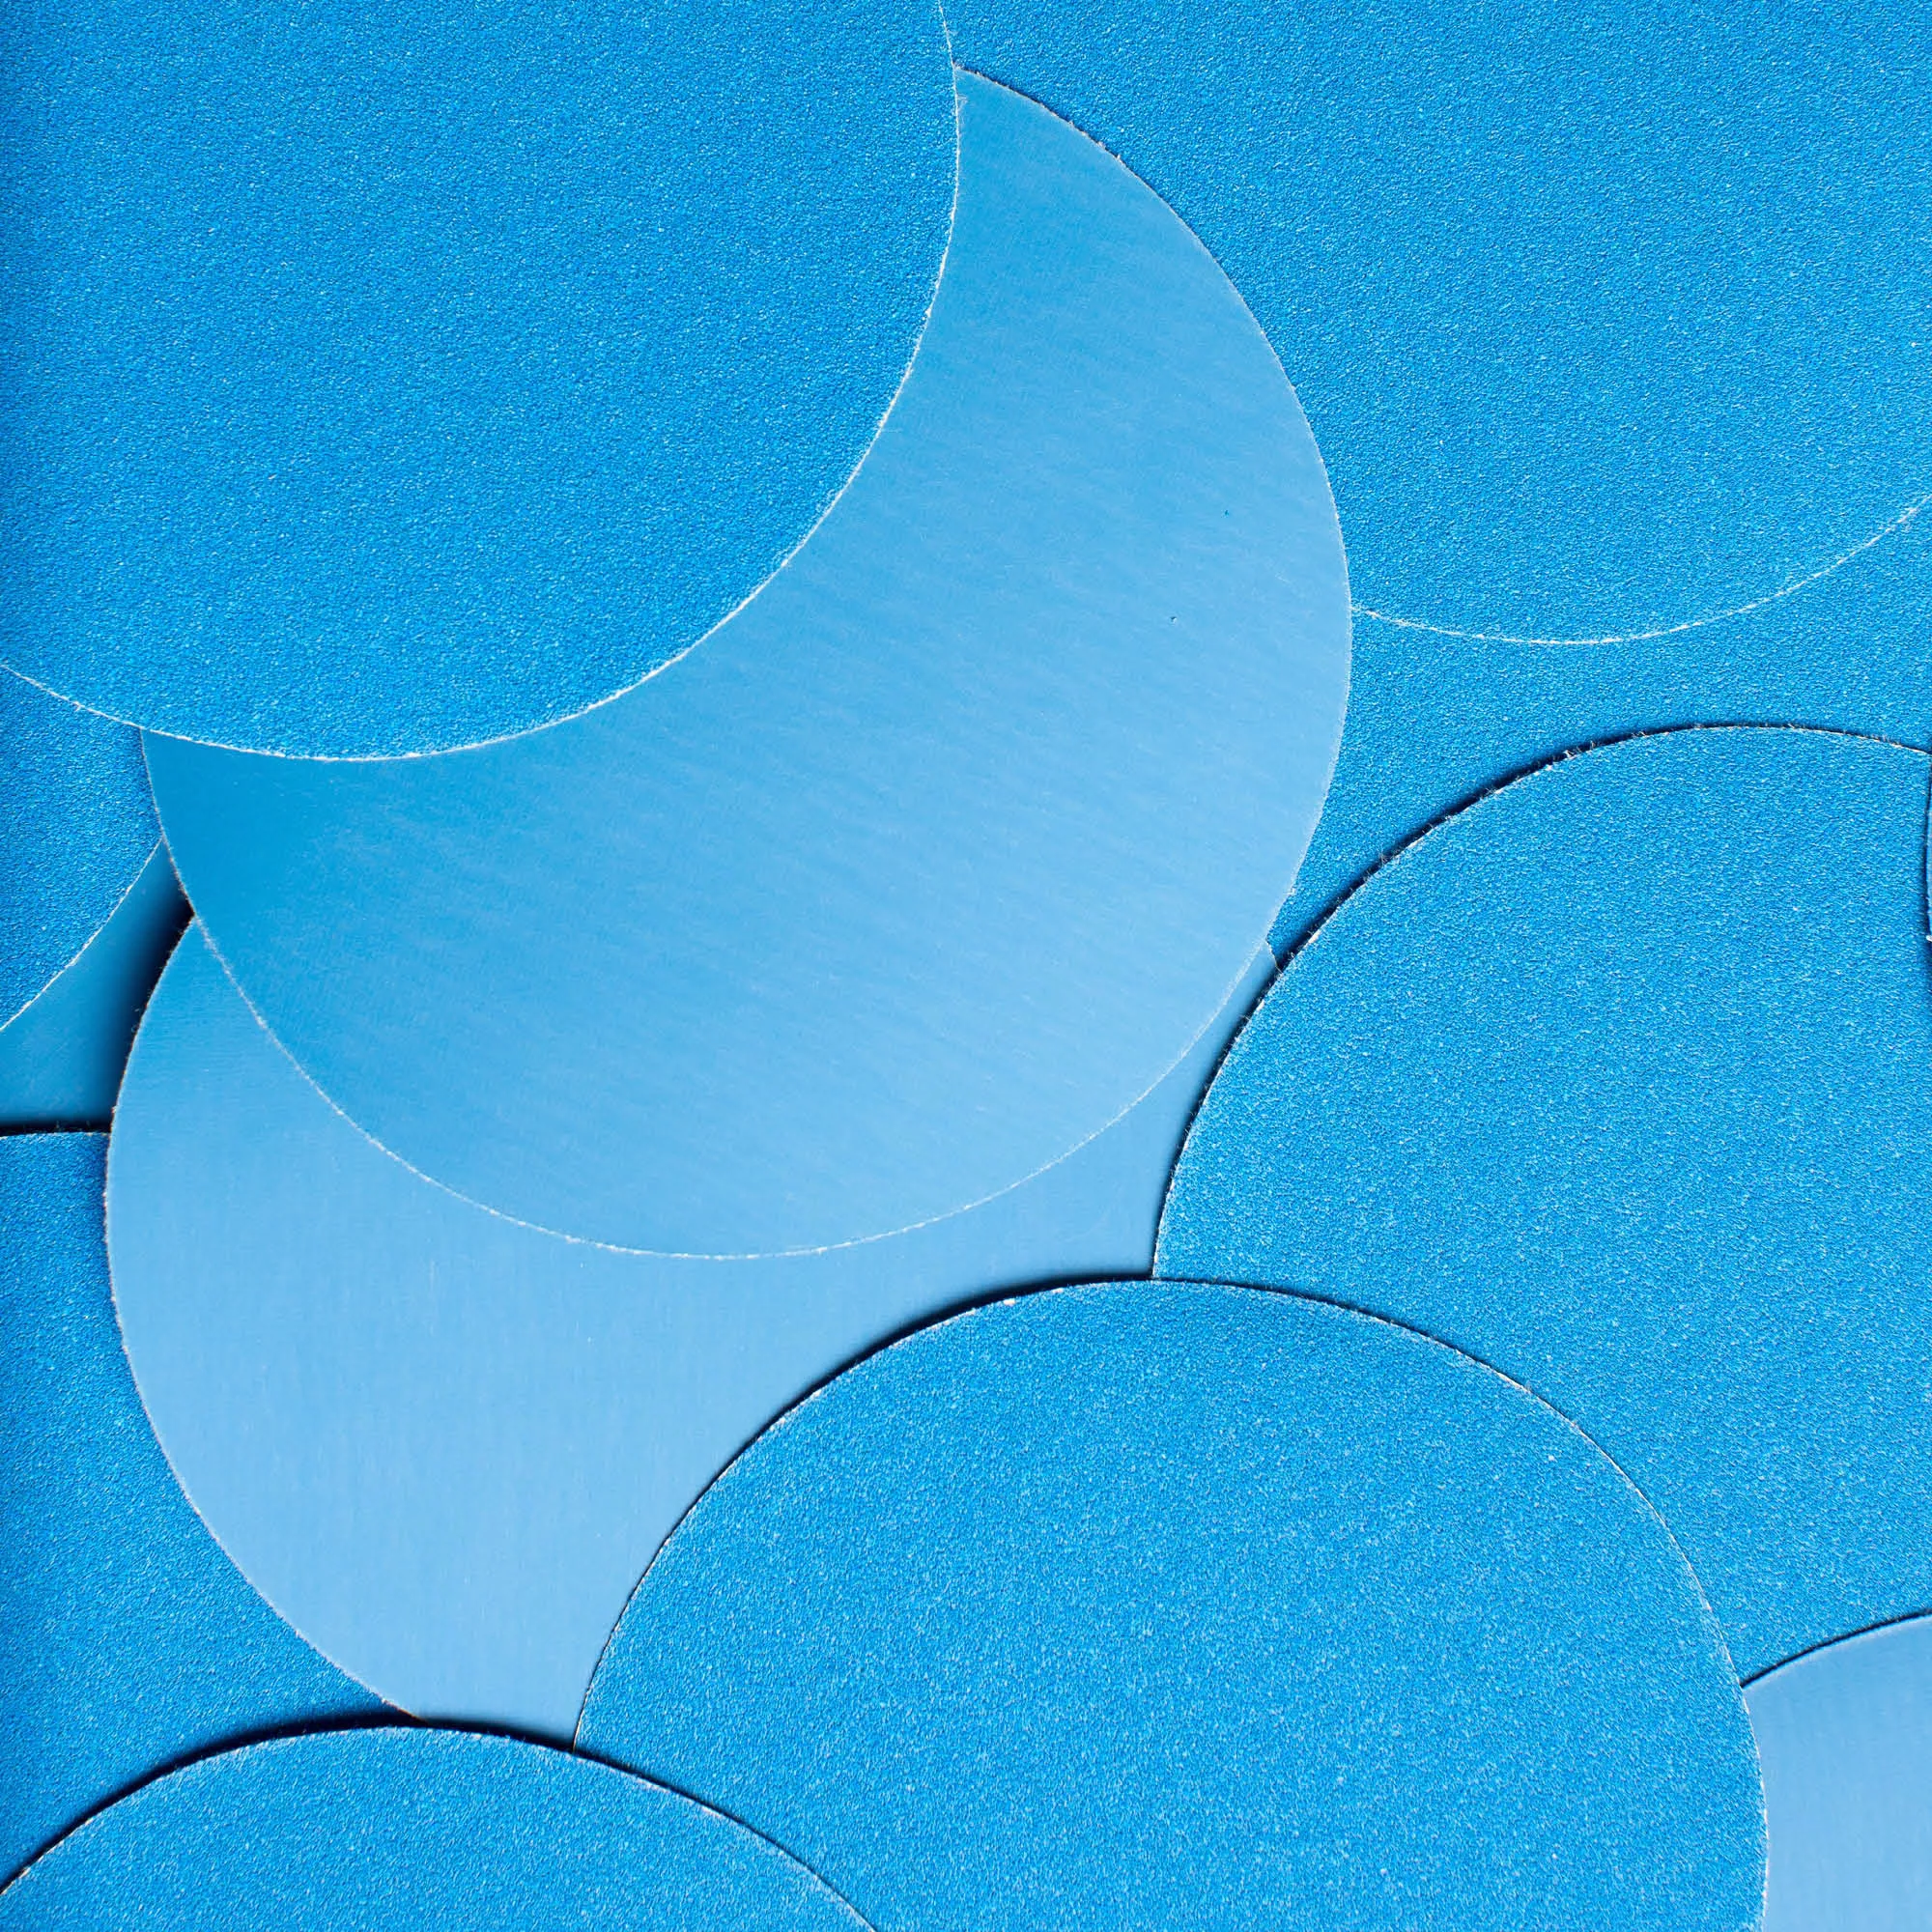 SKU 7100199703 | 3M™ Stikit™ Blue Abrasive Disc Roll